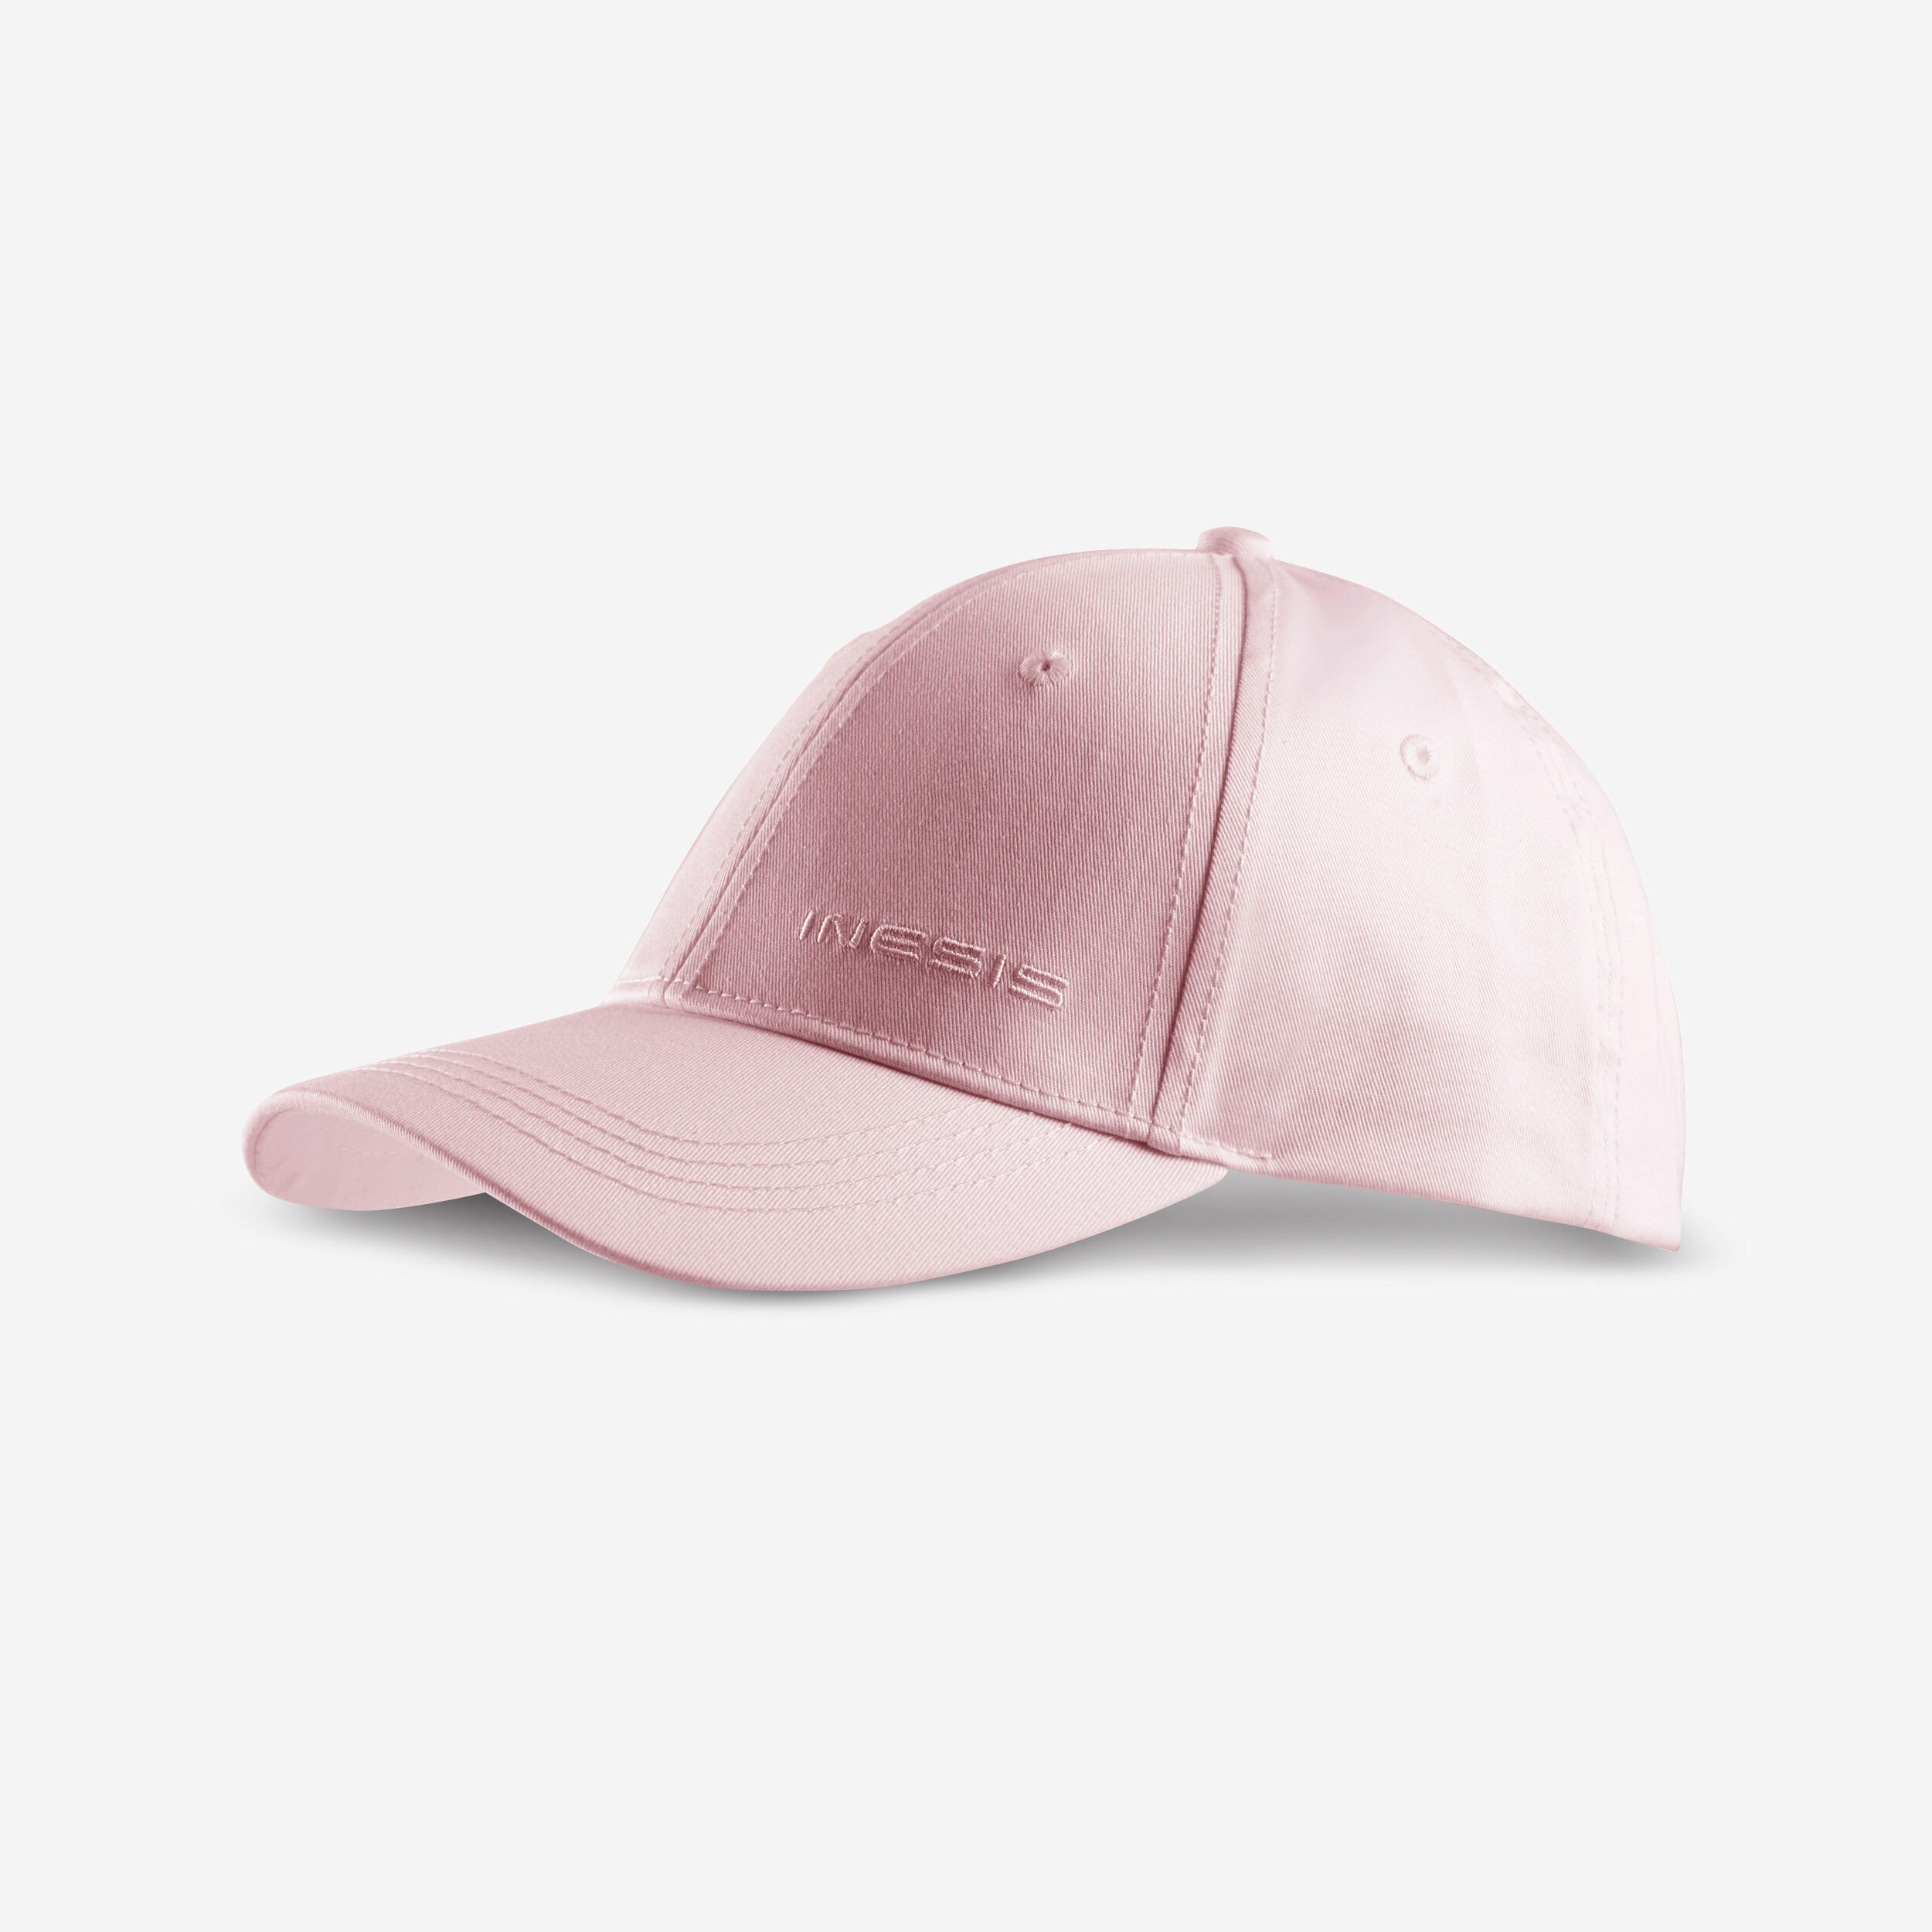 INESIS Adult's golf cap - MW 500 pink